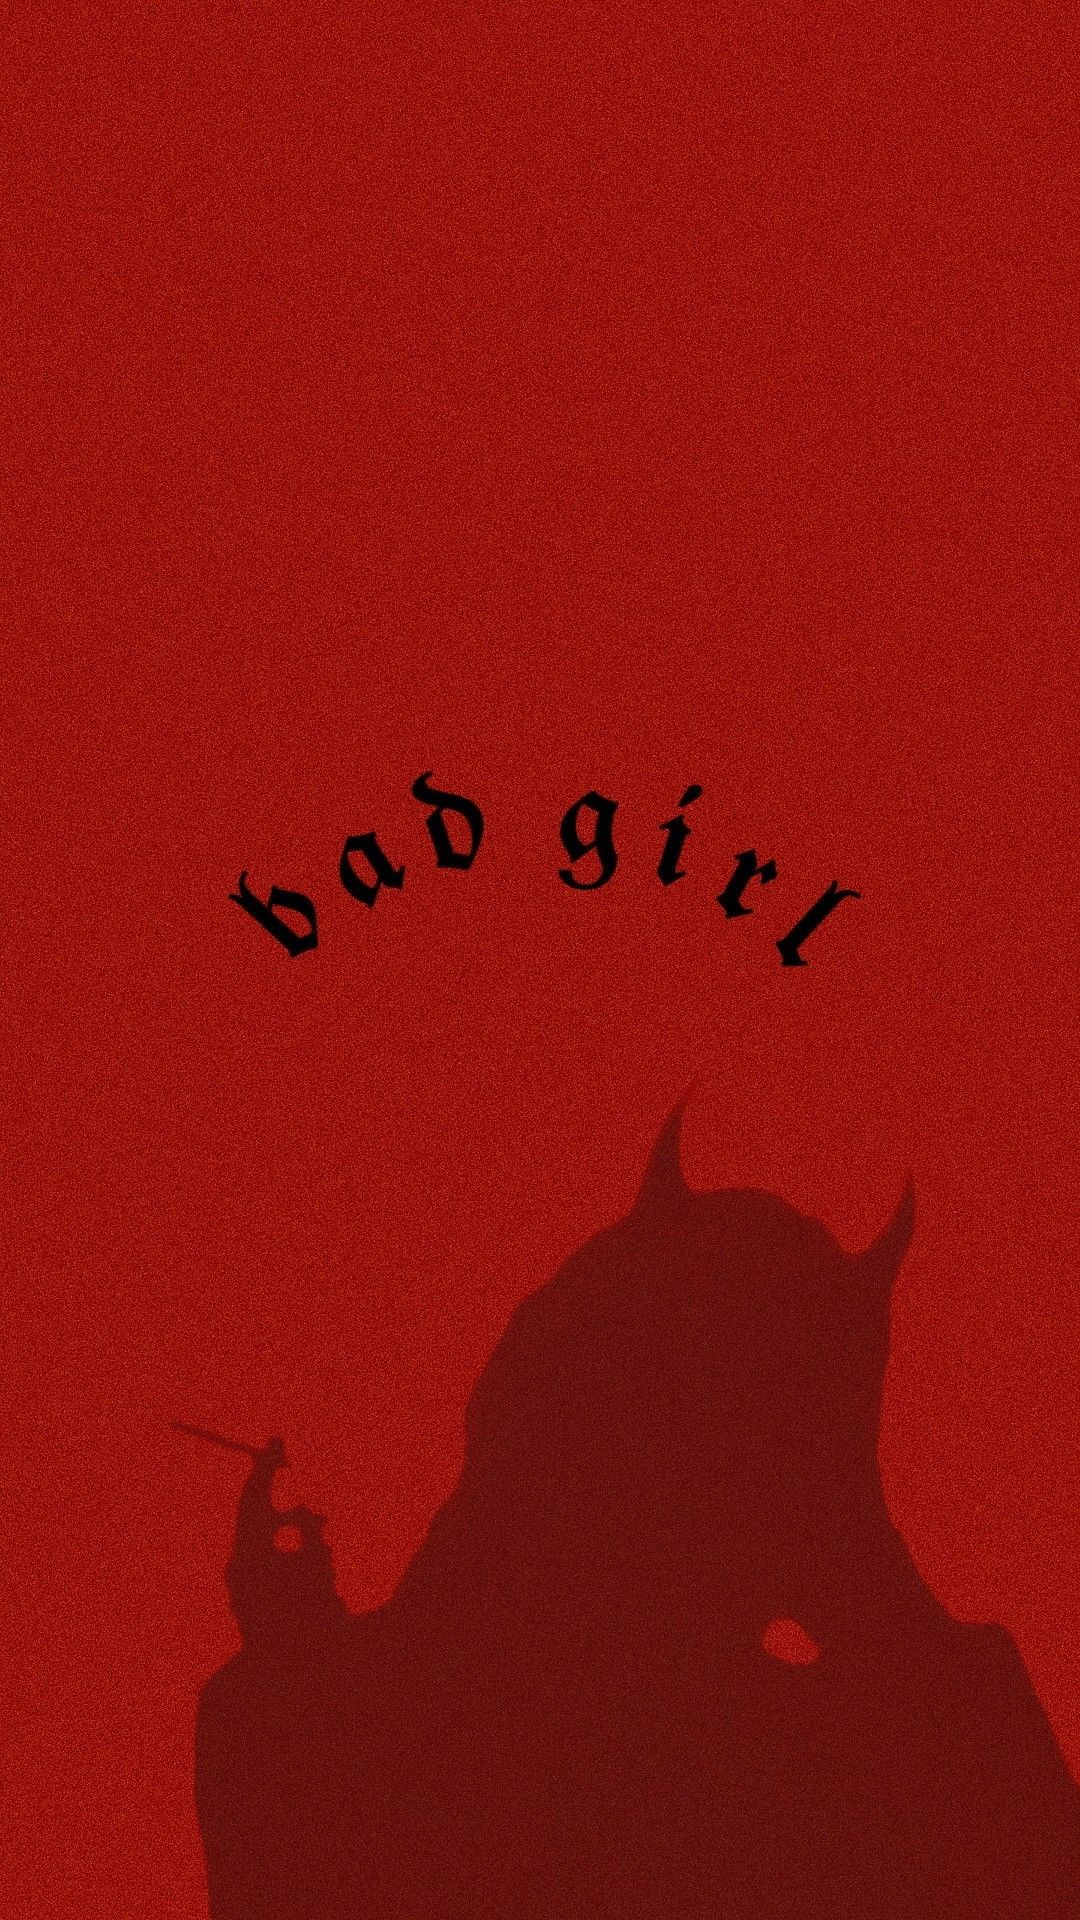 Bad Girl Wallpaper Free HD Wallpaper